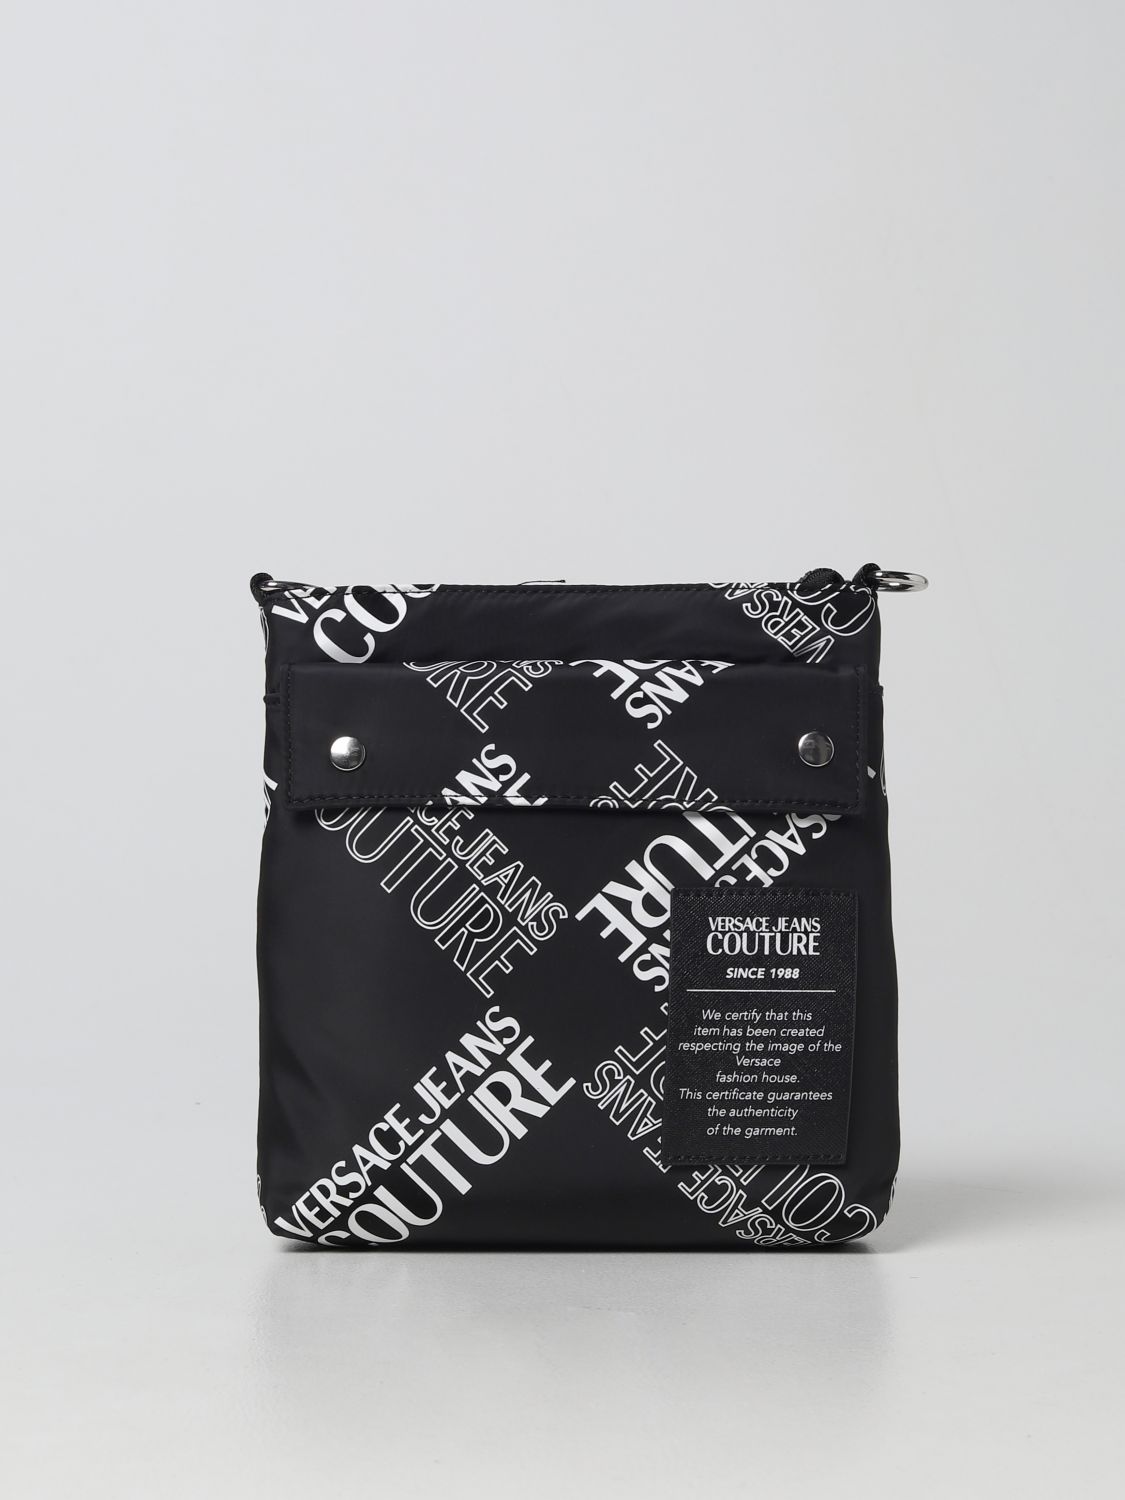 Versace Jeans Couture Black Graphic Shoulder Bag